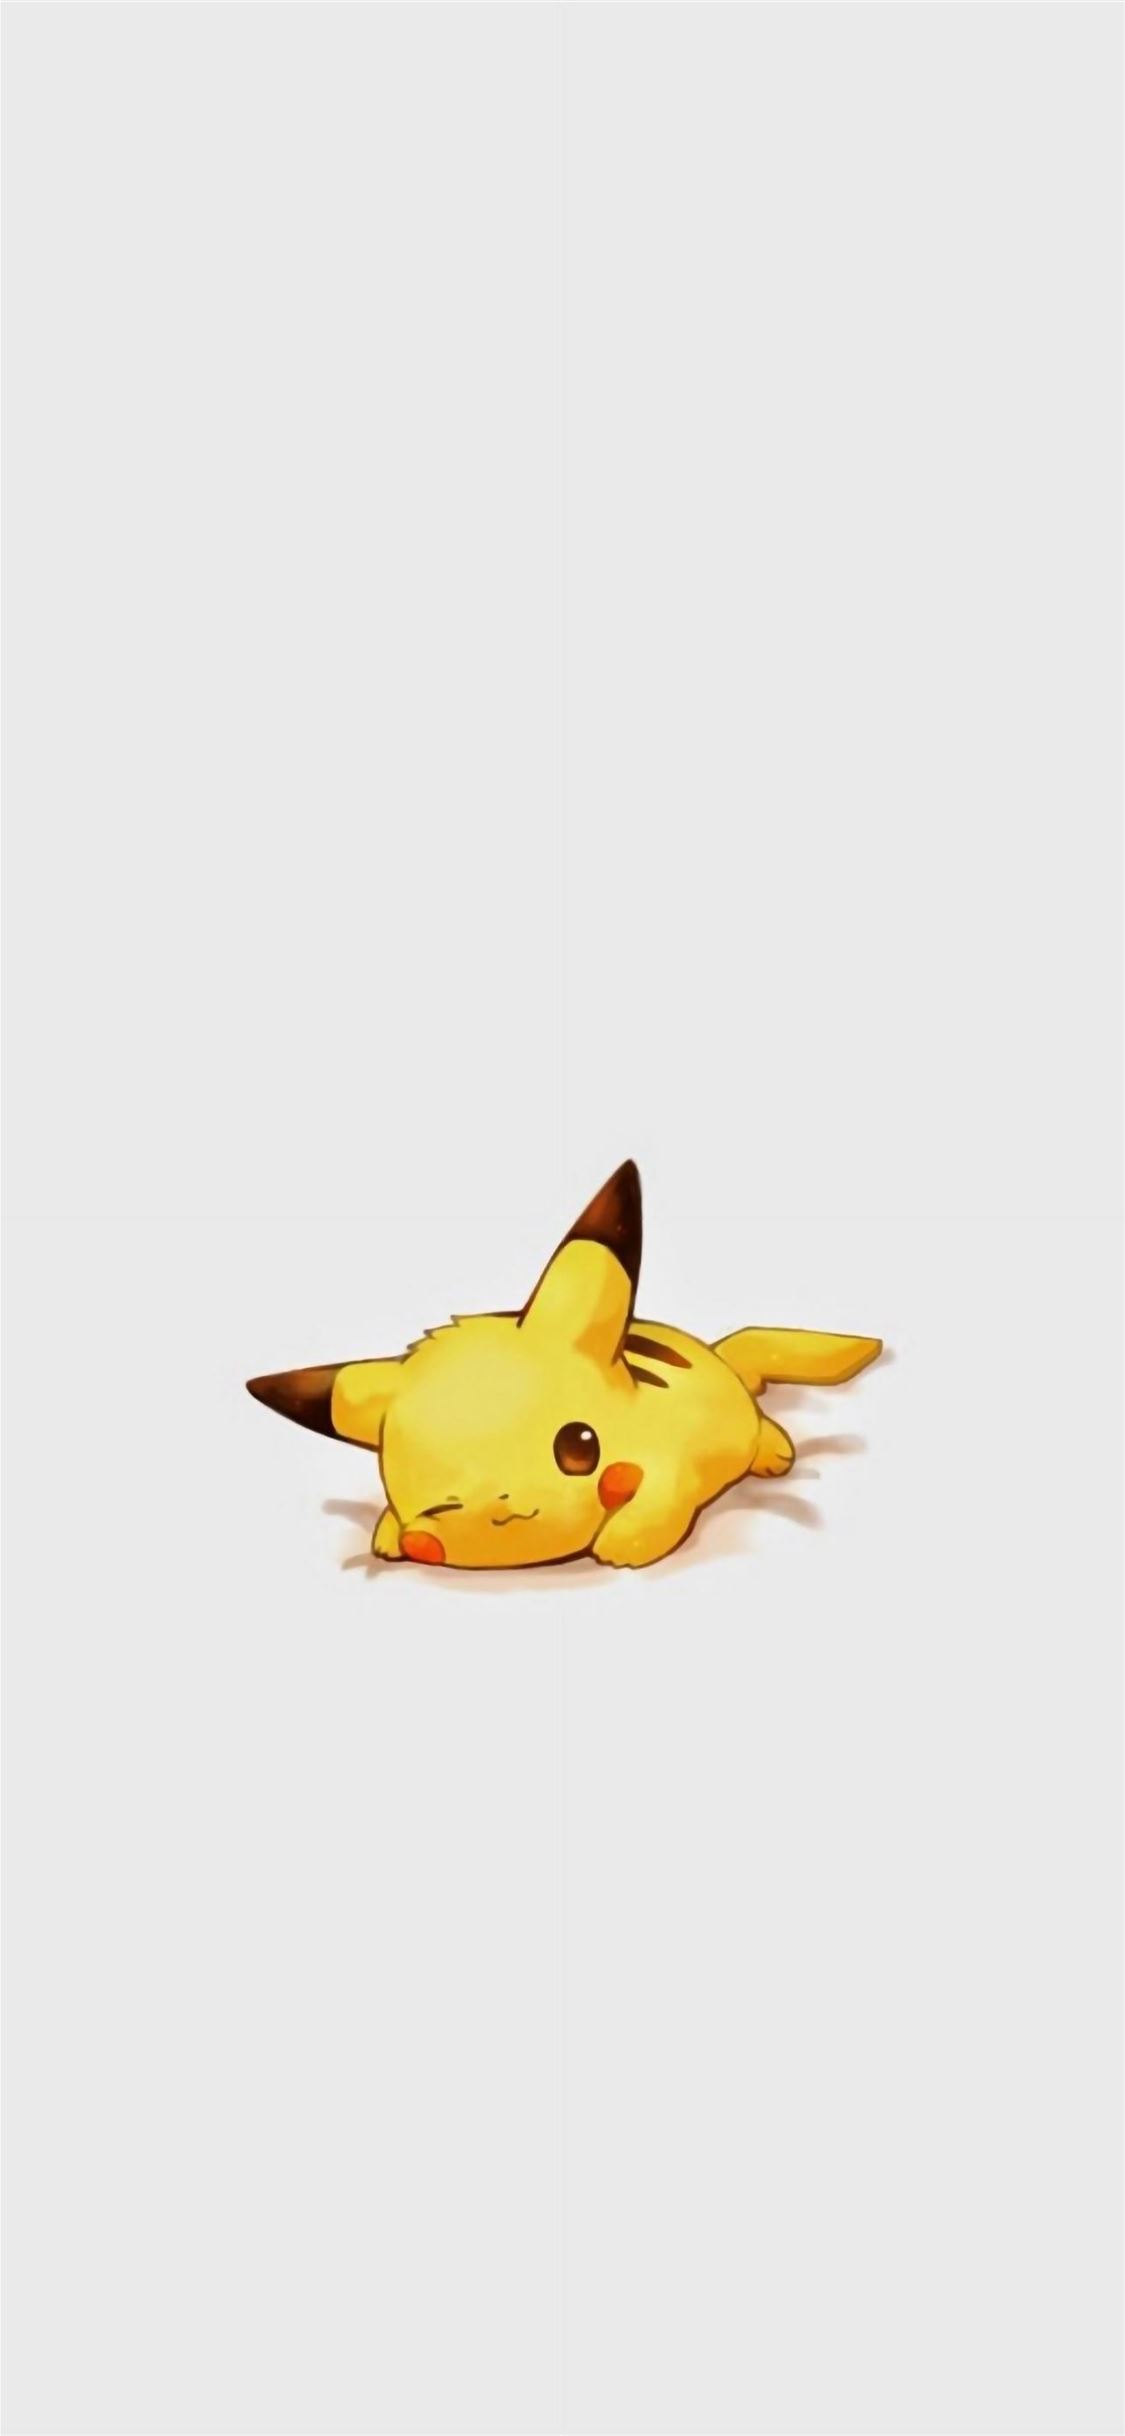 Cute Pikachu Pokemon Character iPhone wallpaper 